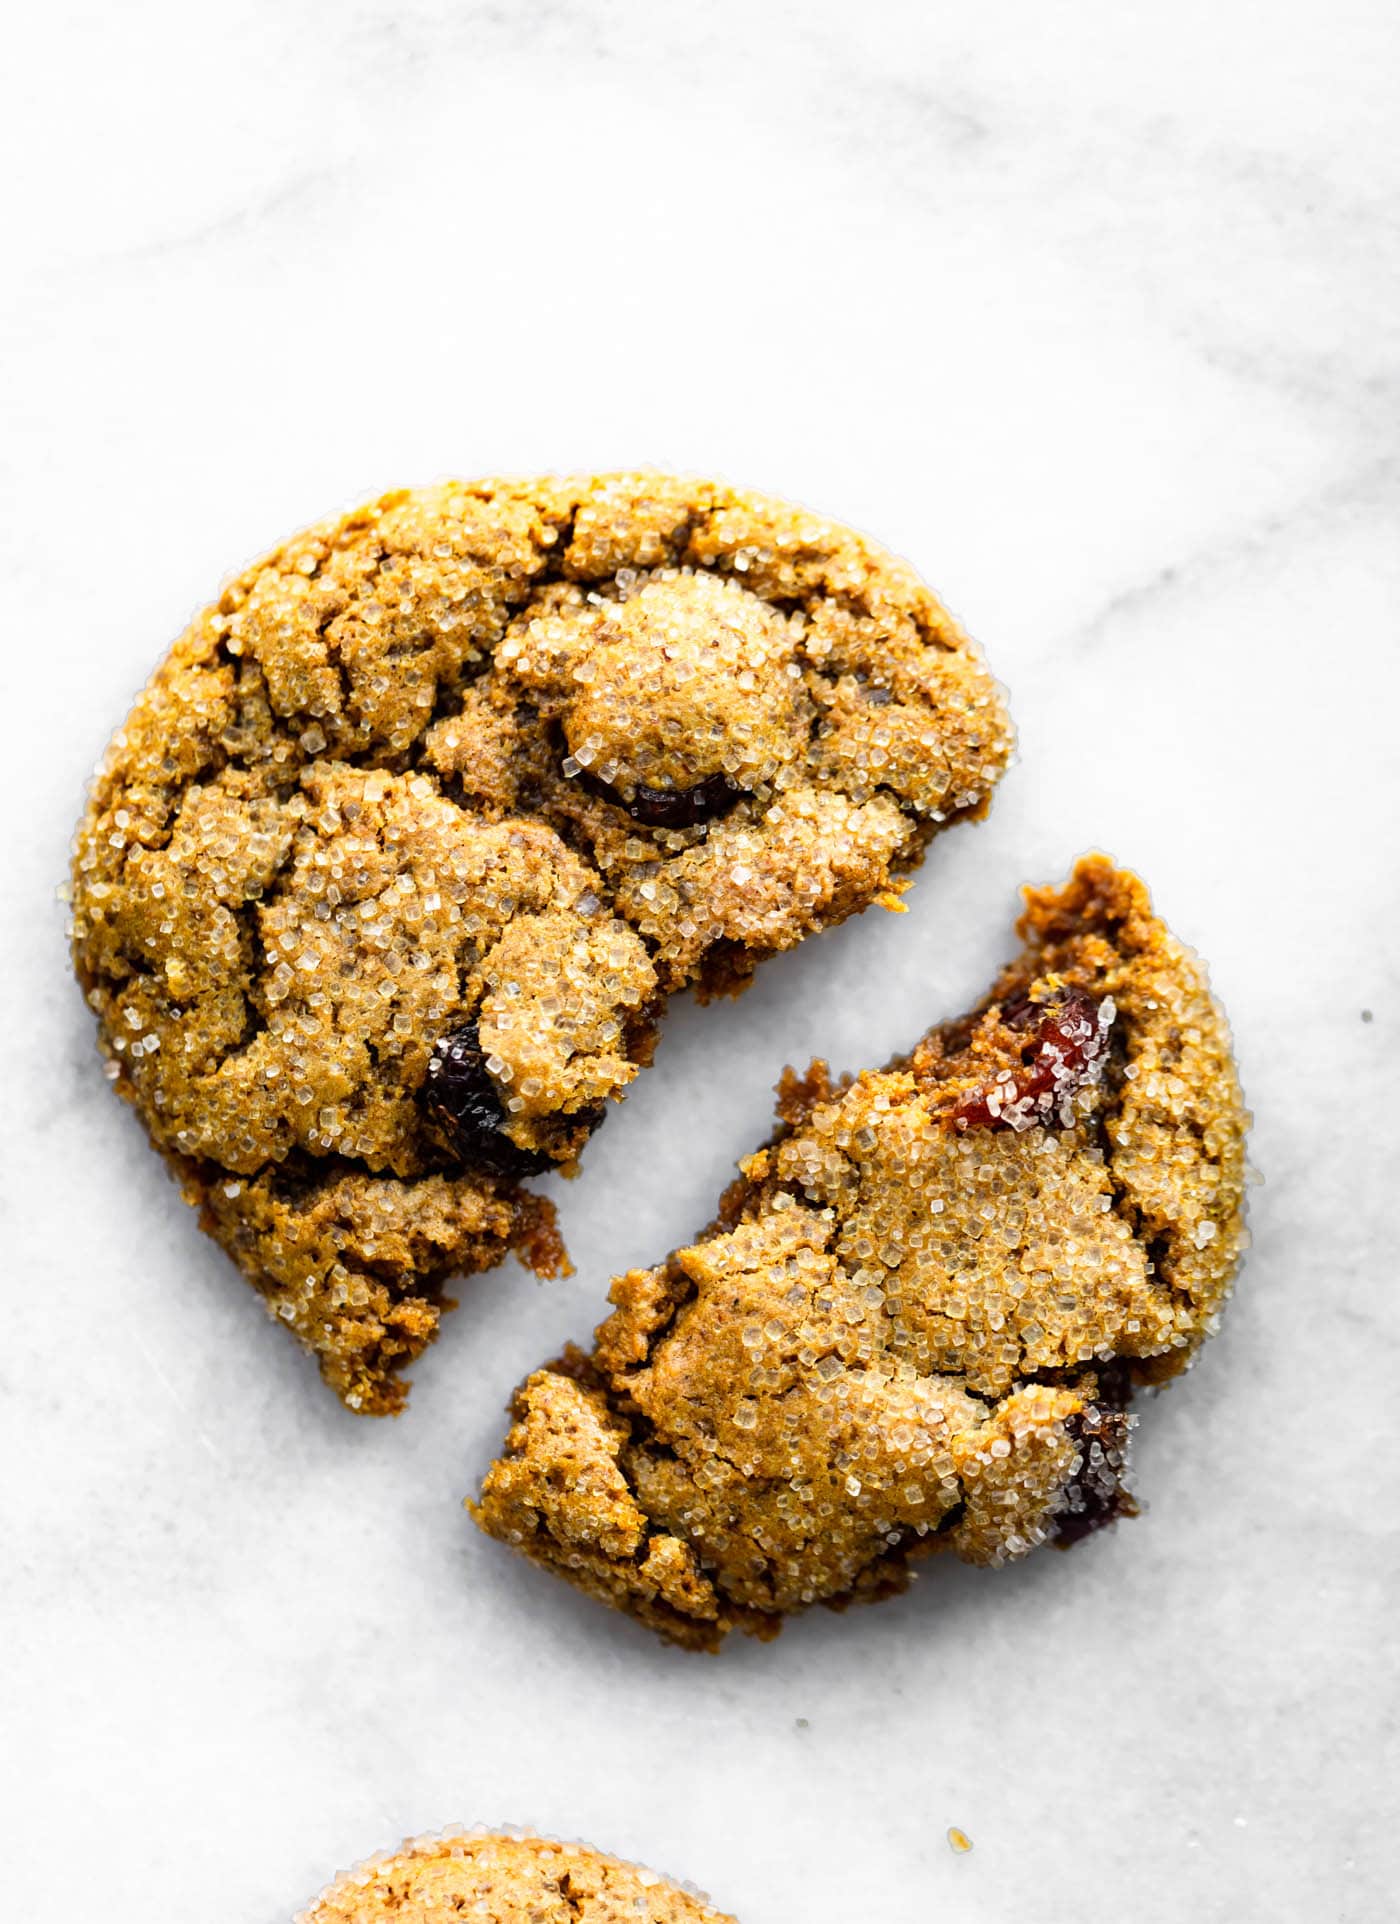 Vegan cranberry almond molasses cookie split in half